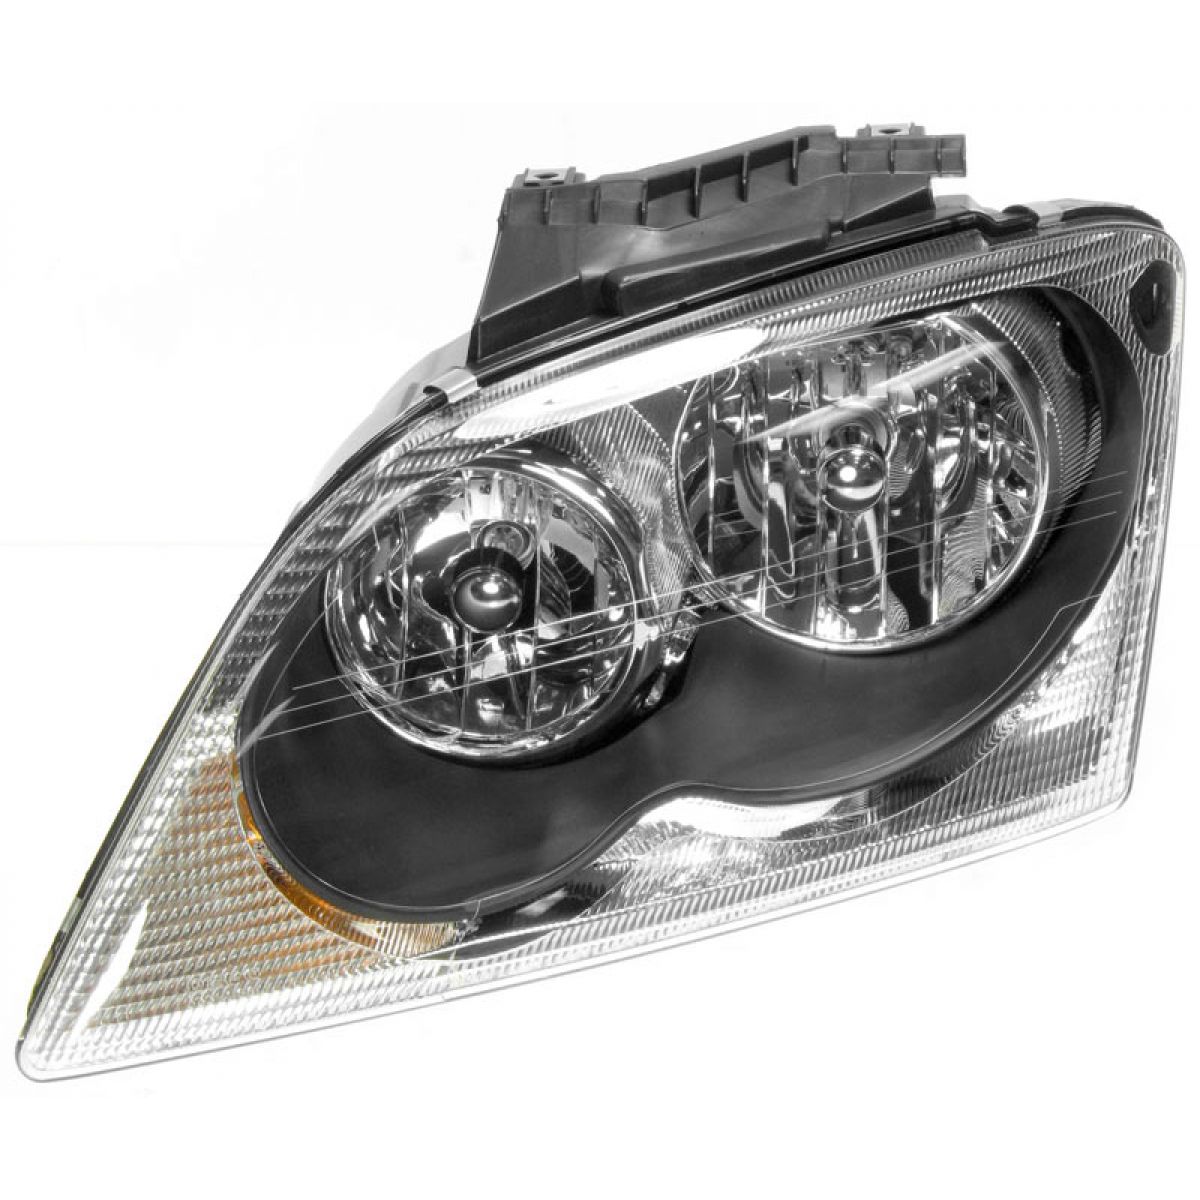 Chrysler pacifica headlight bulb replacement #4